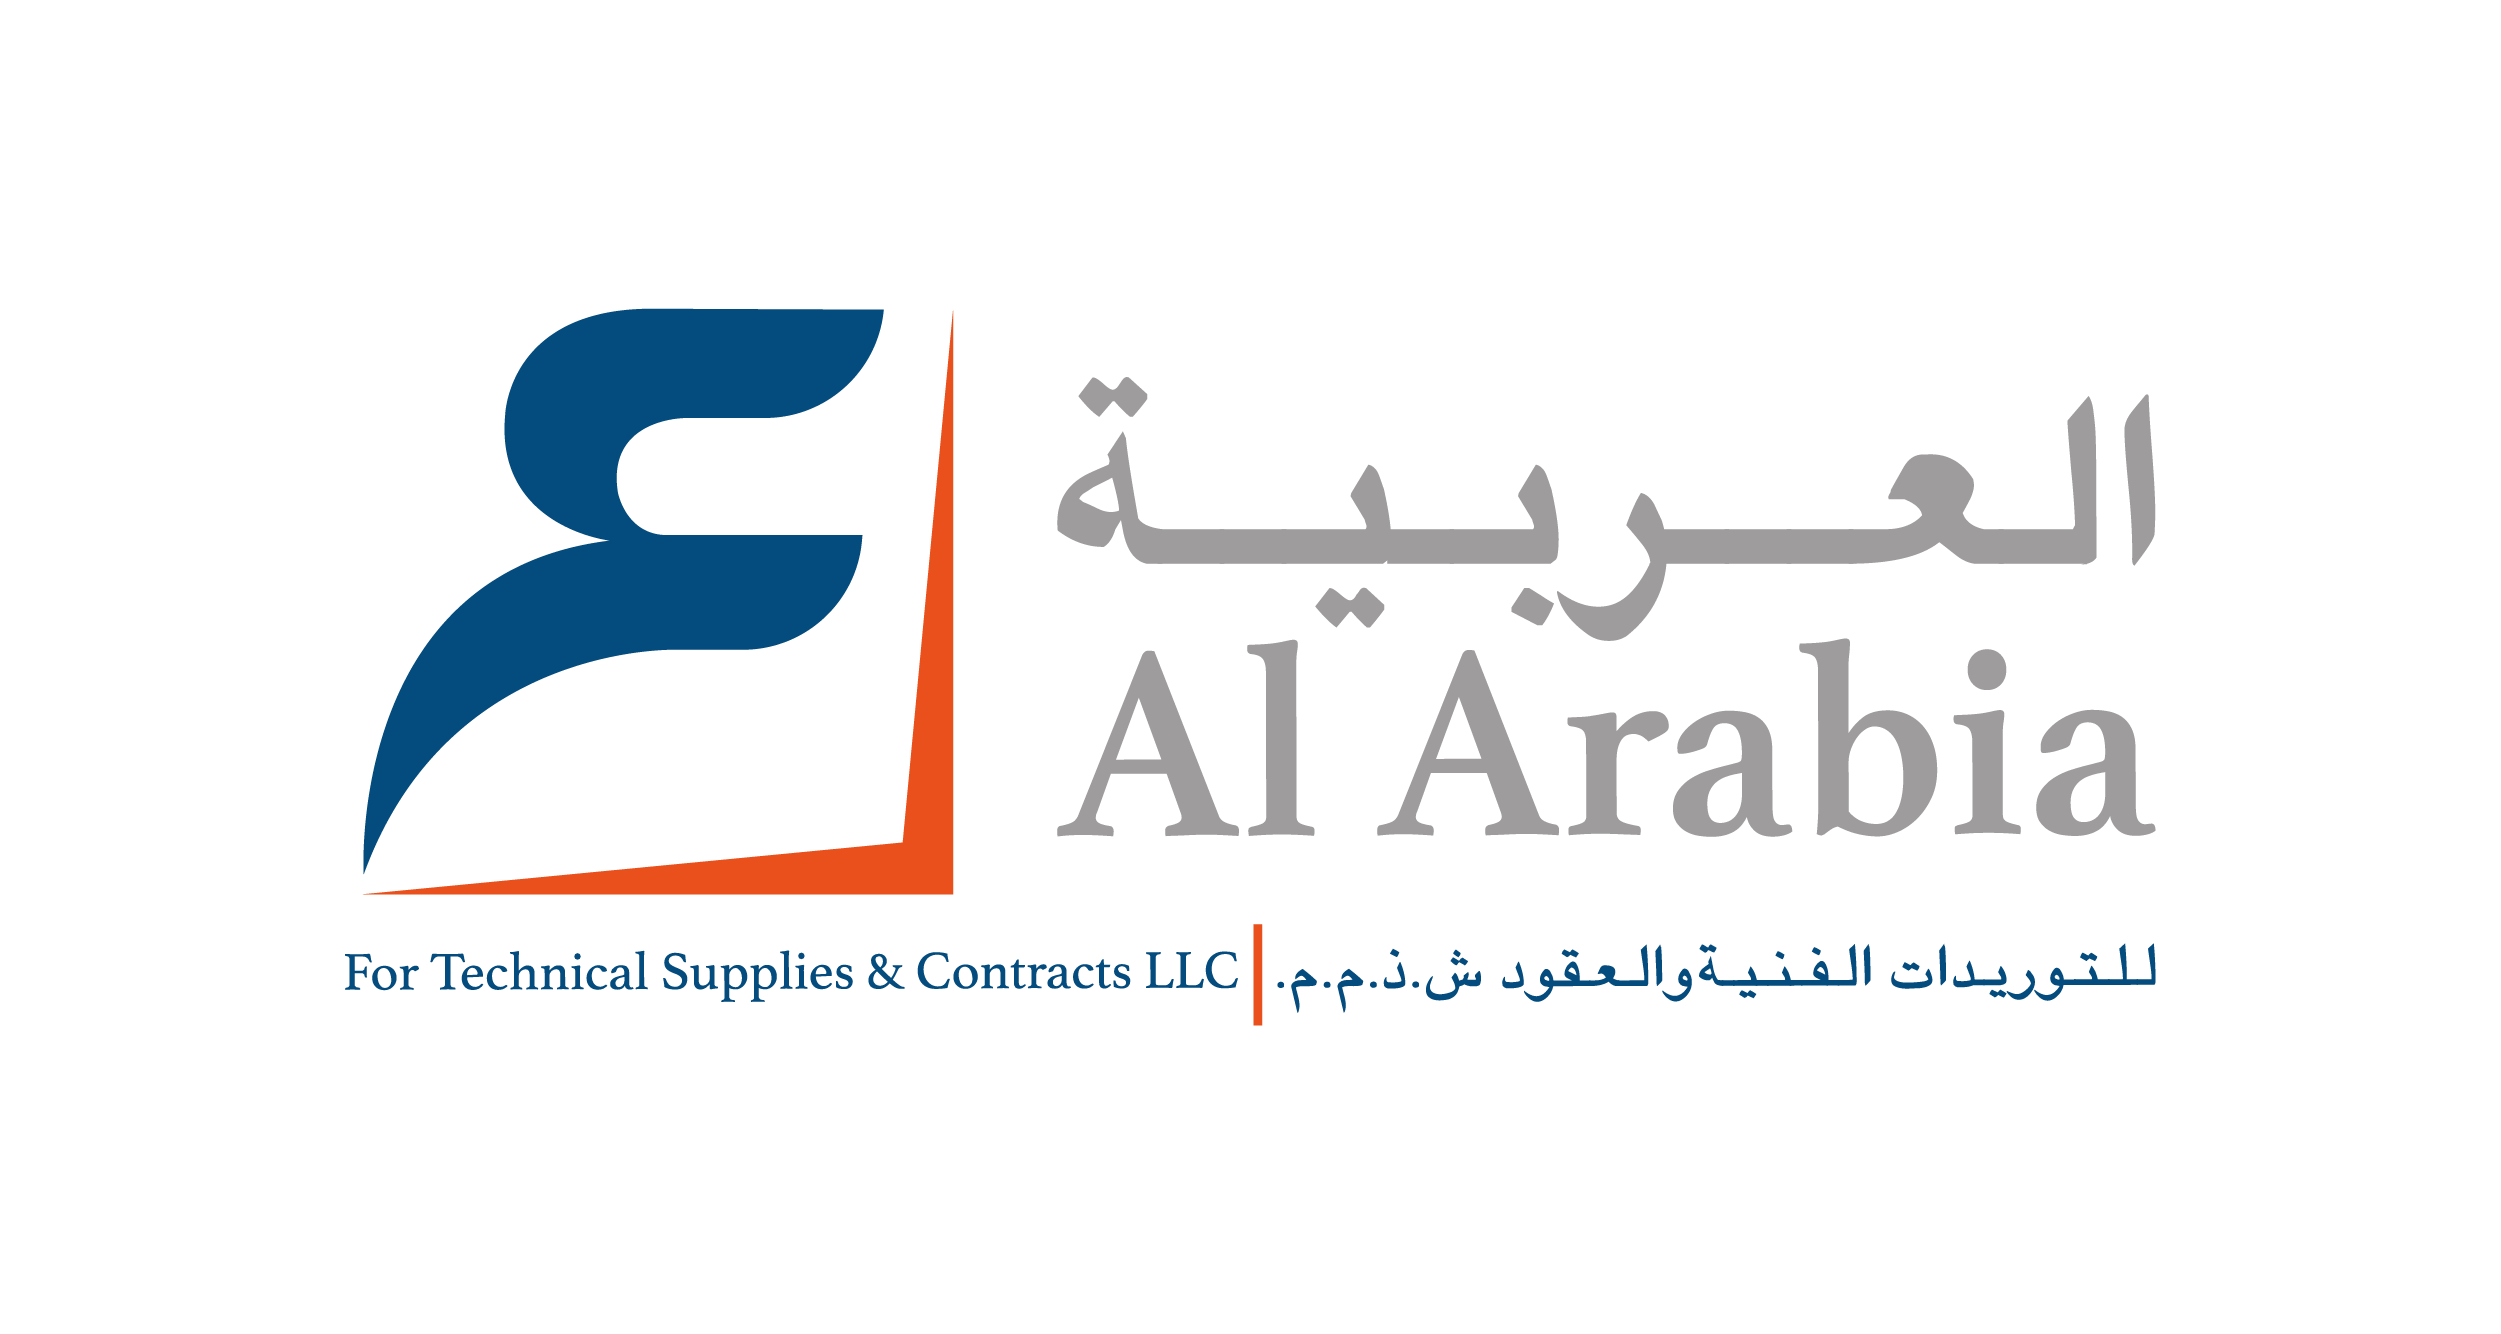 Al Arabia for Technical Supplies & Contracts LLC